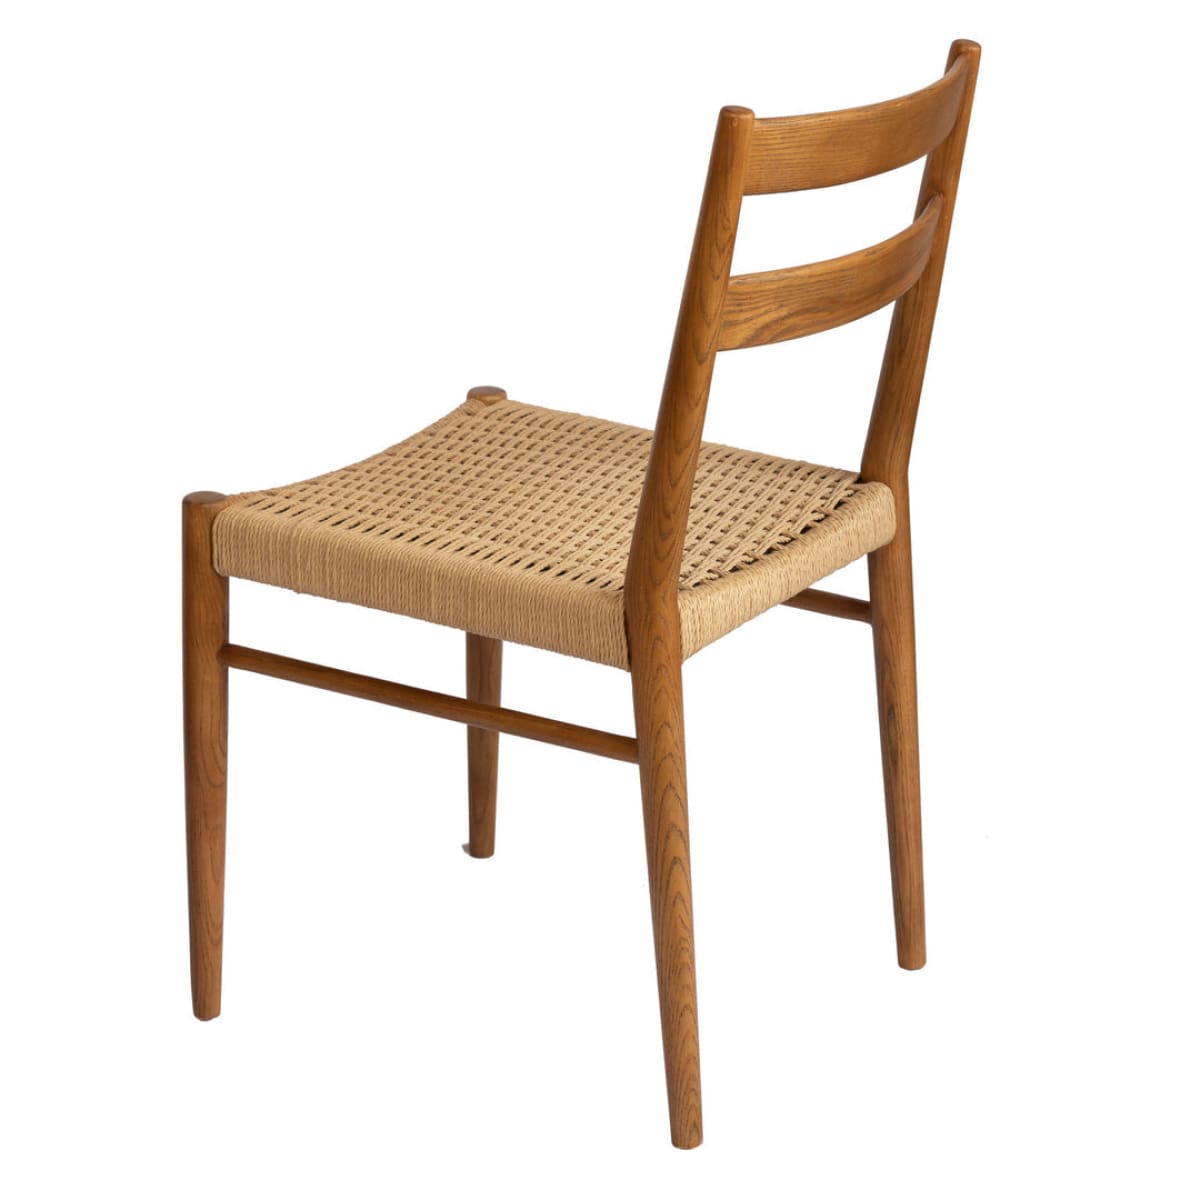 Furniture Barn - Jakarta Dining Chair - Walnut/Natural Woven Seat